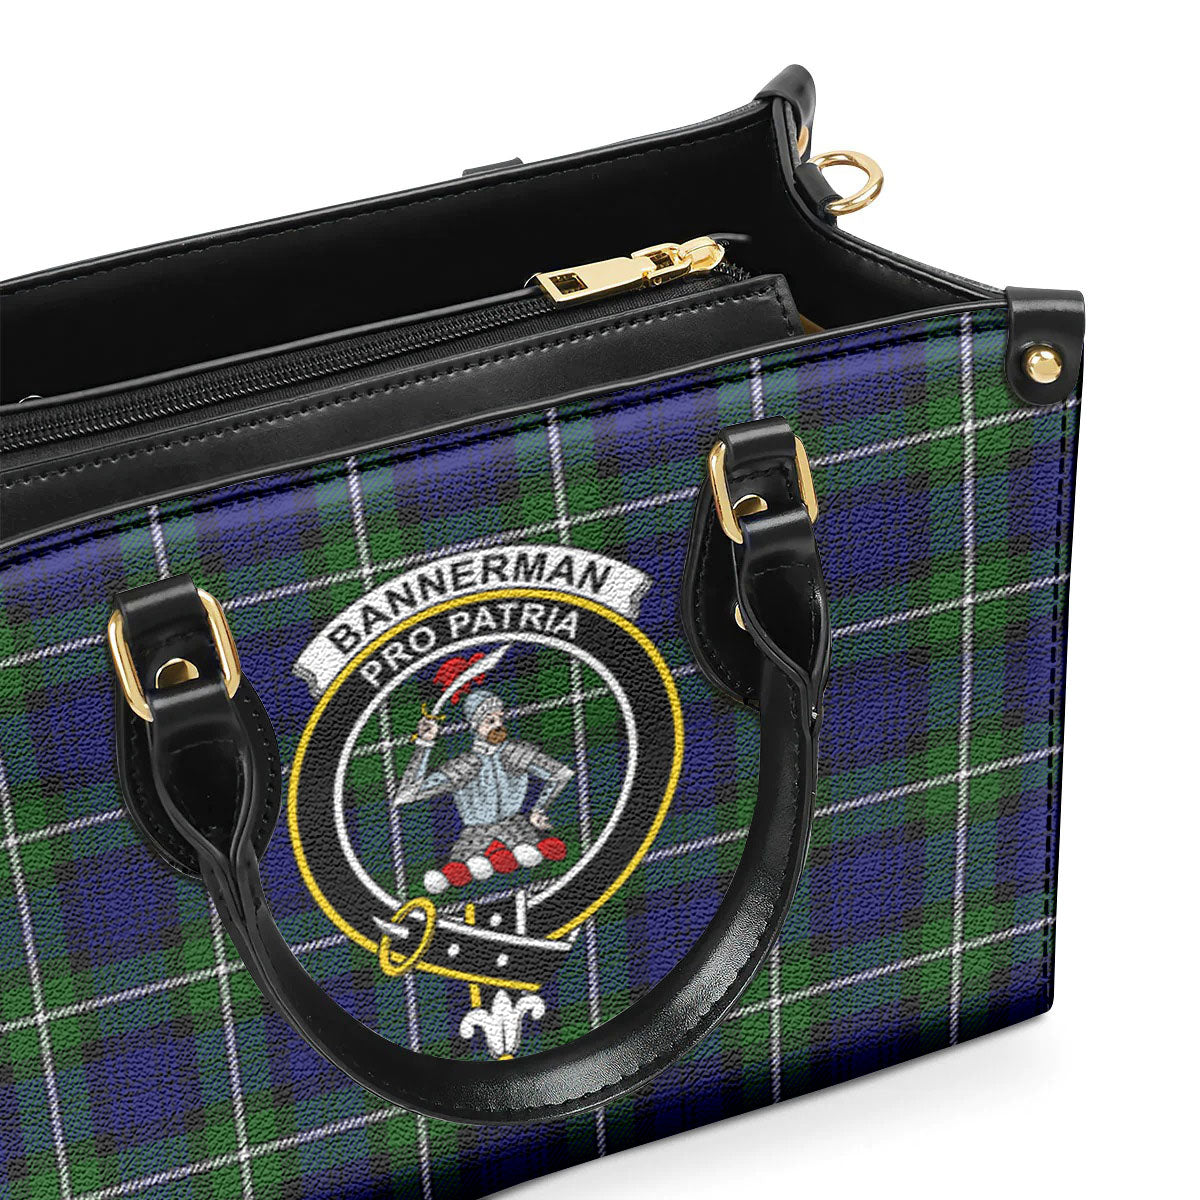 Bannerman Tartan Crest Leather Handbag